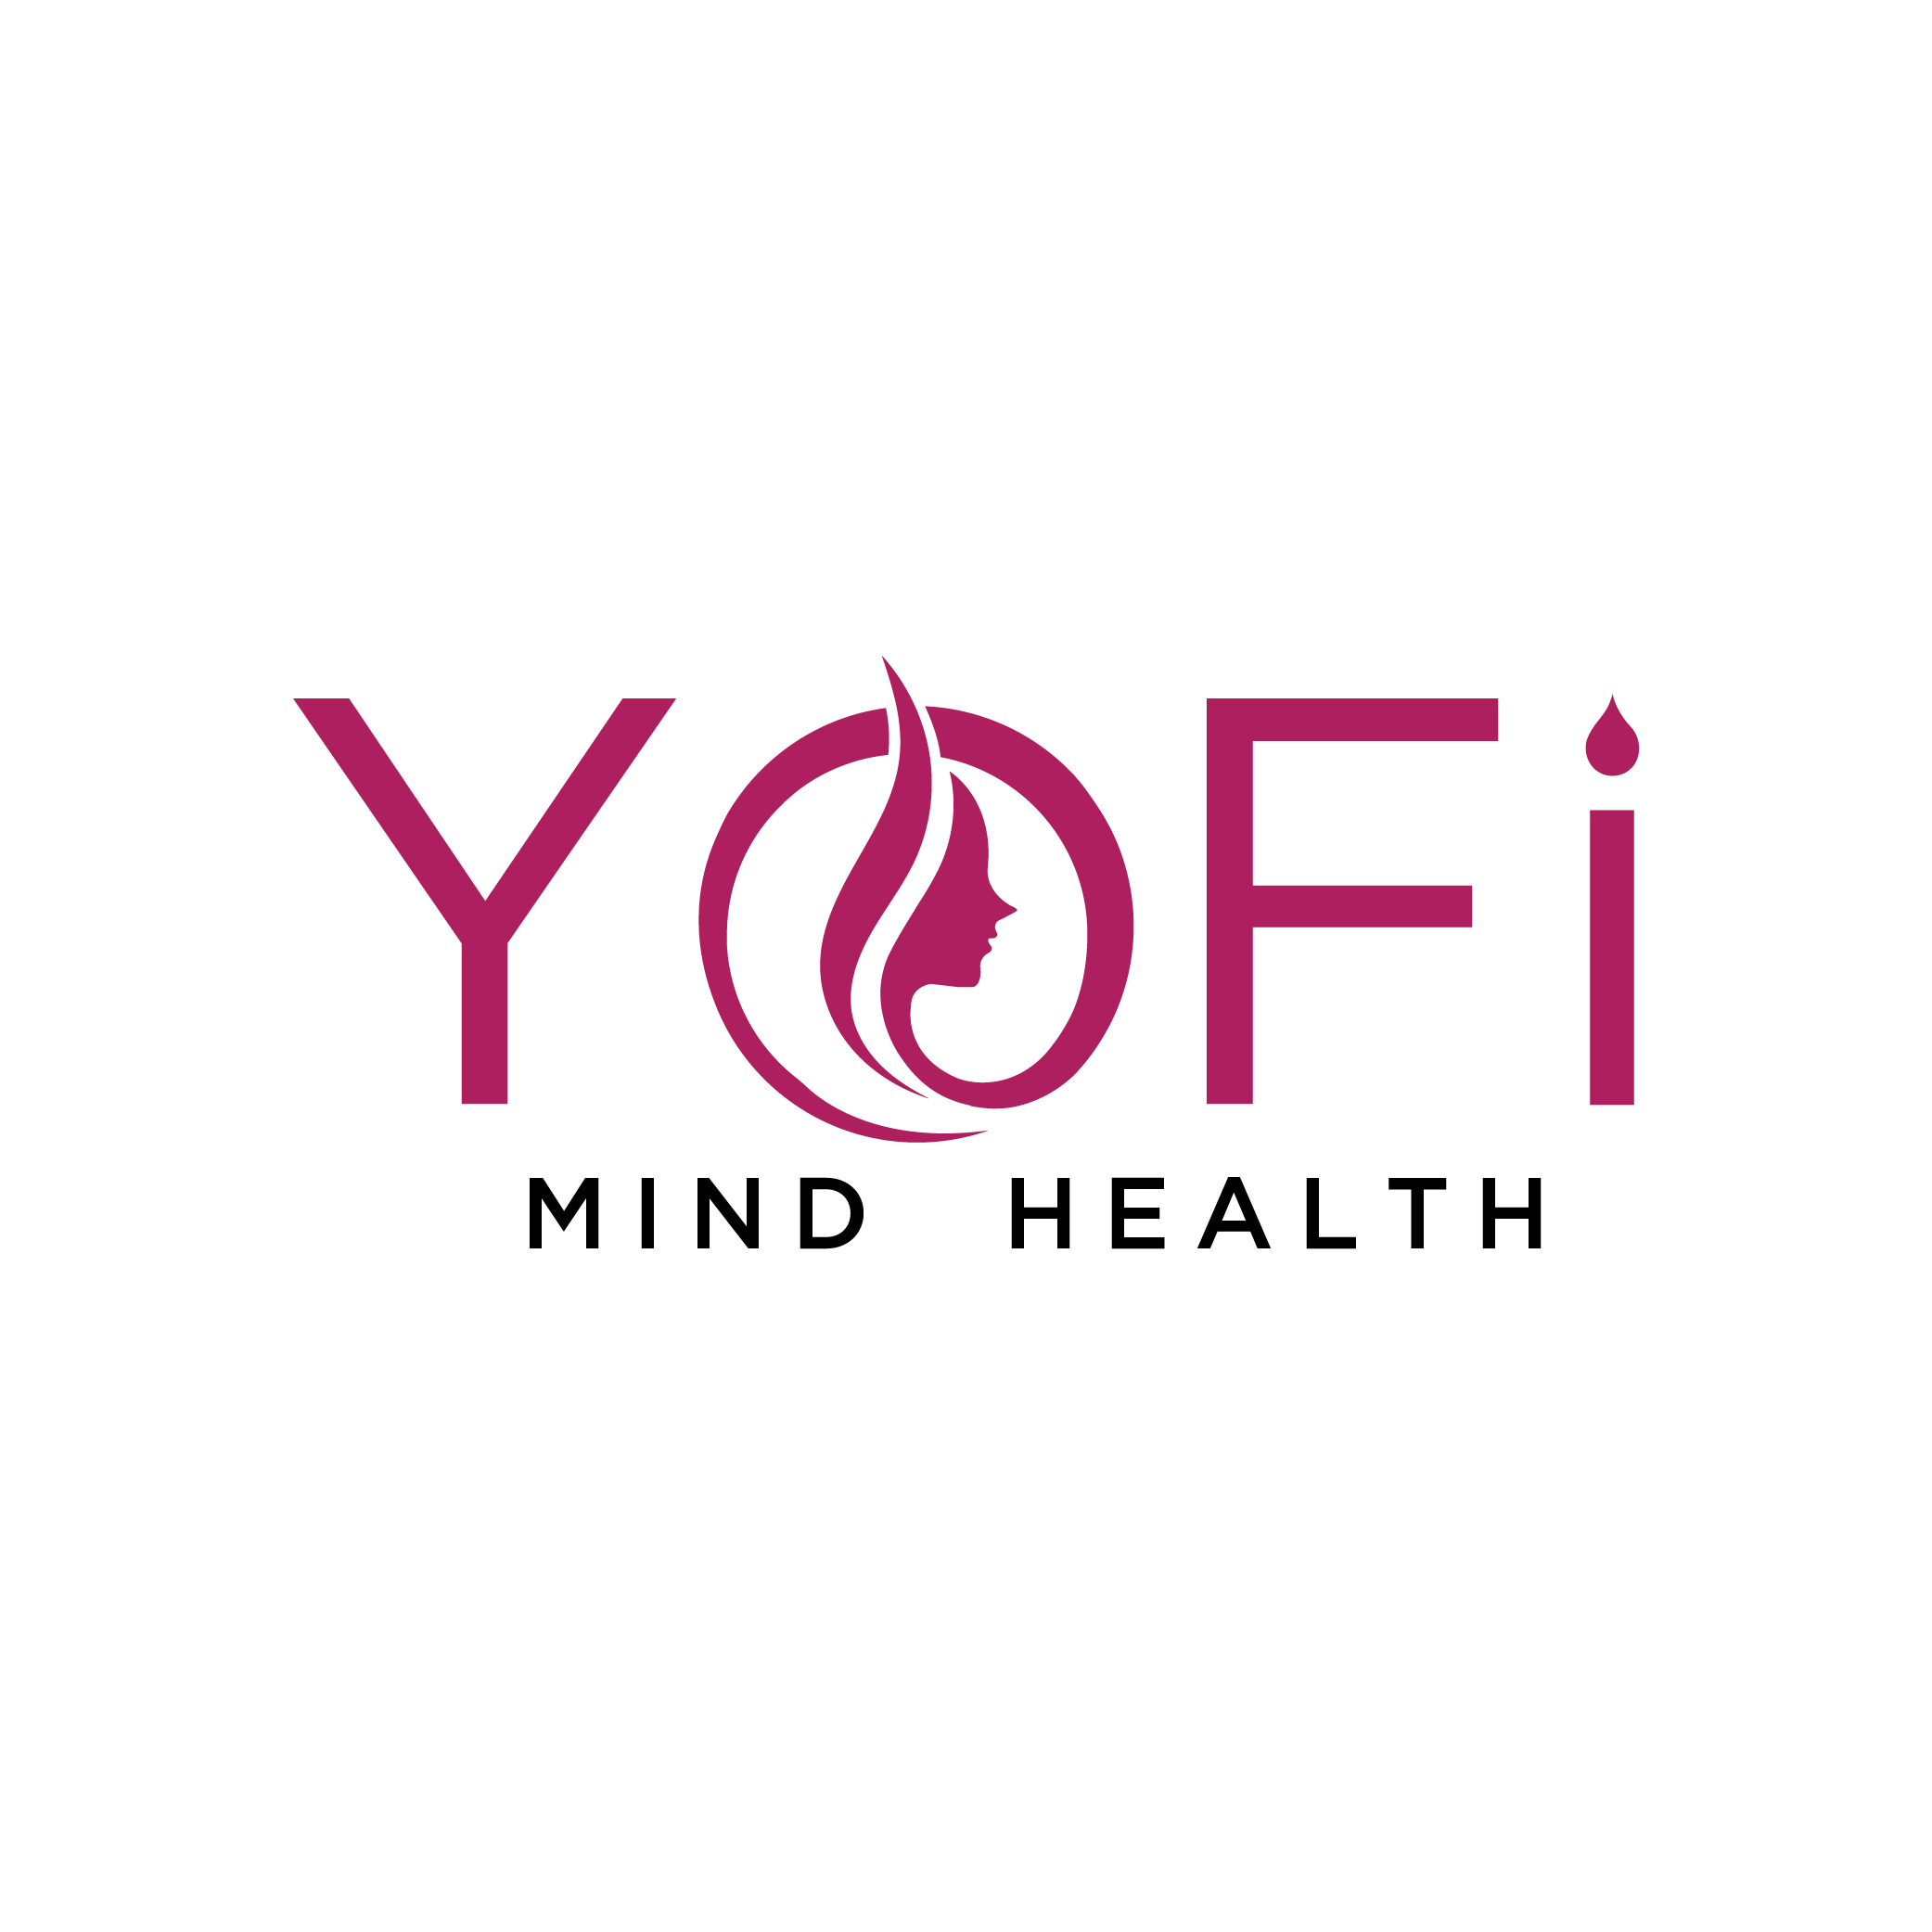 Yofi Mind Health